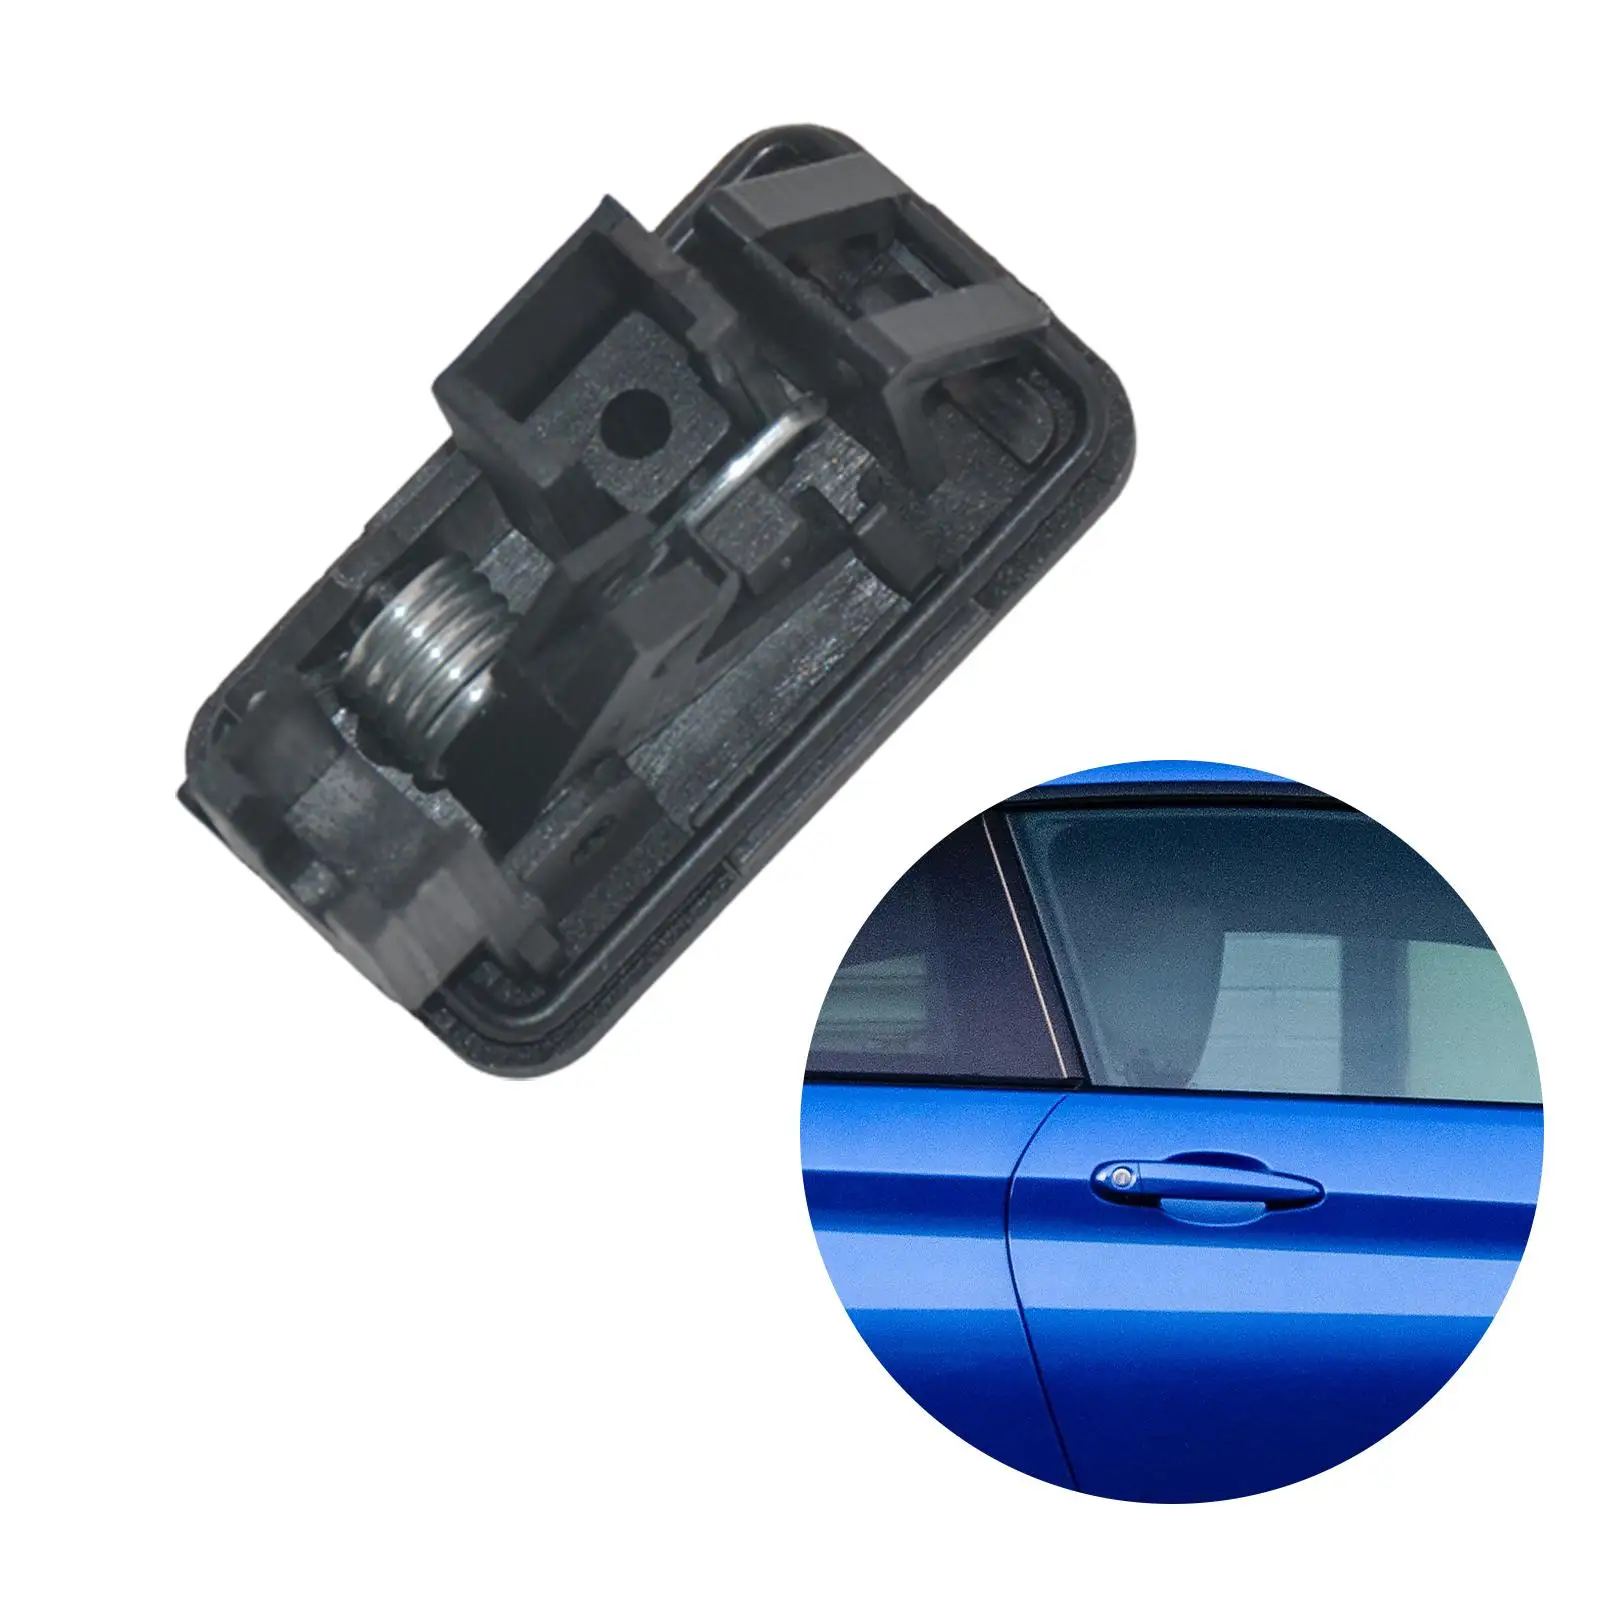 76520-77J00 Car Auto Parts Replaces Accessories Fuel Filler Door Lid Lock Release Actuator for Suzuki Swift SX4 Vitara